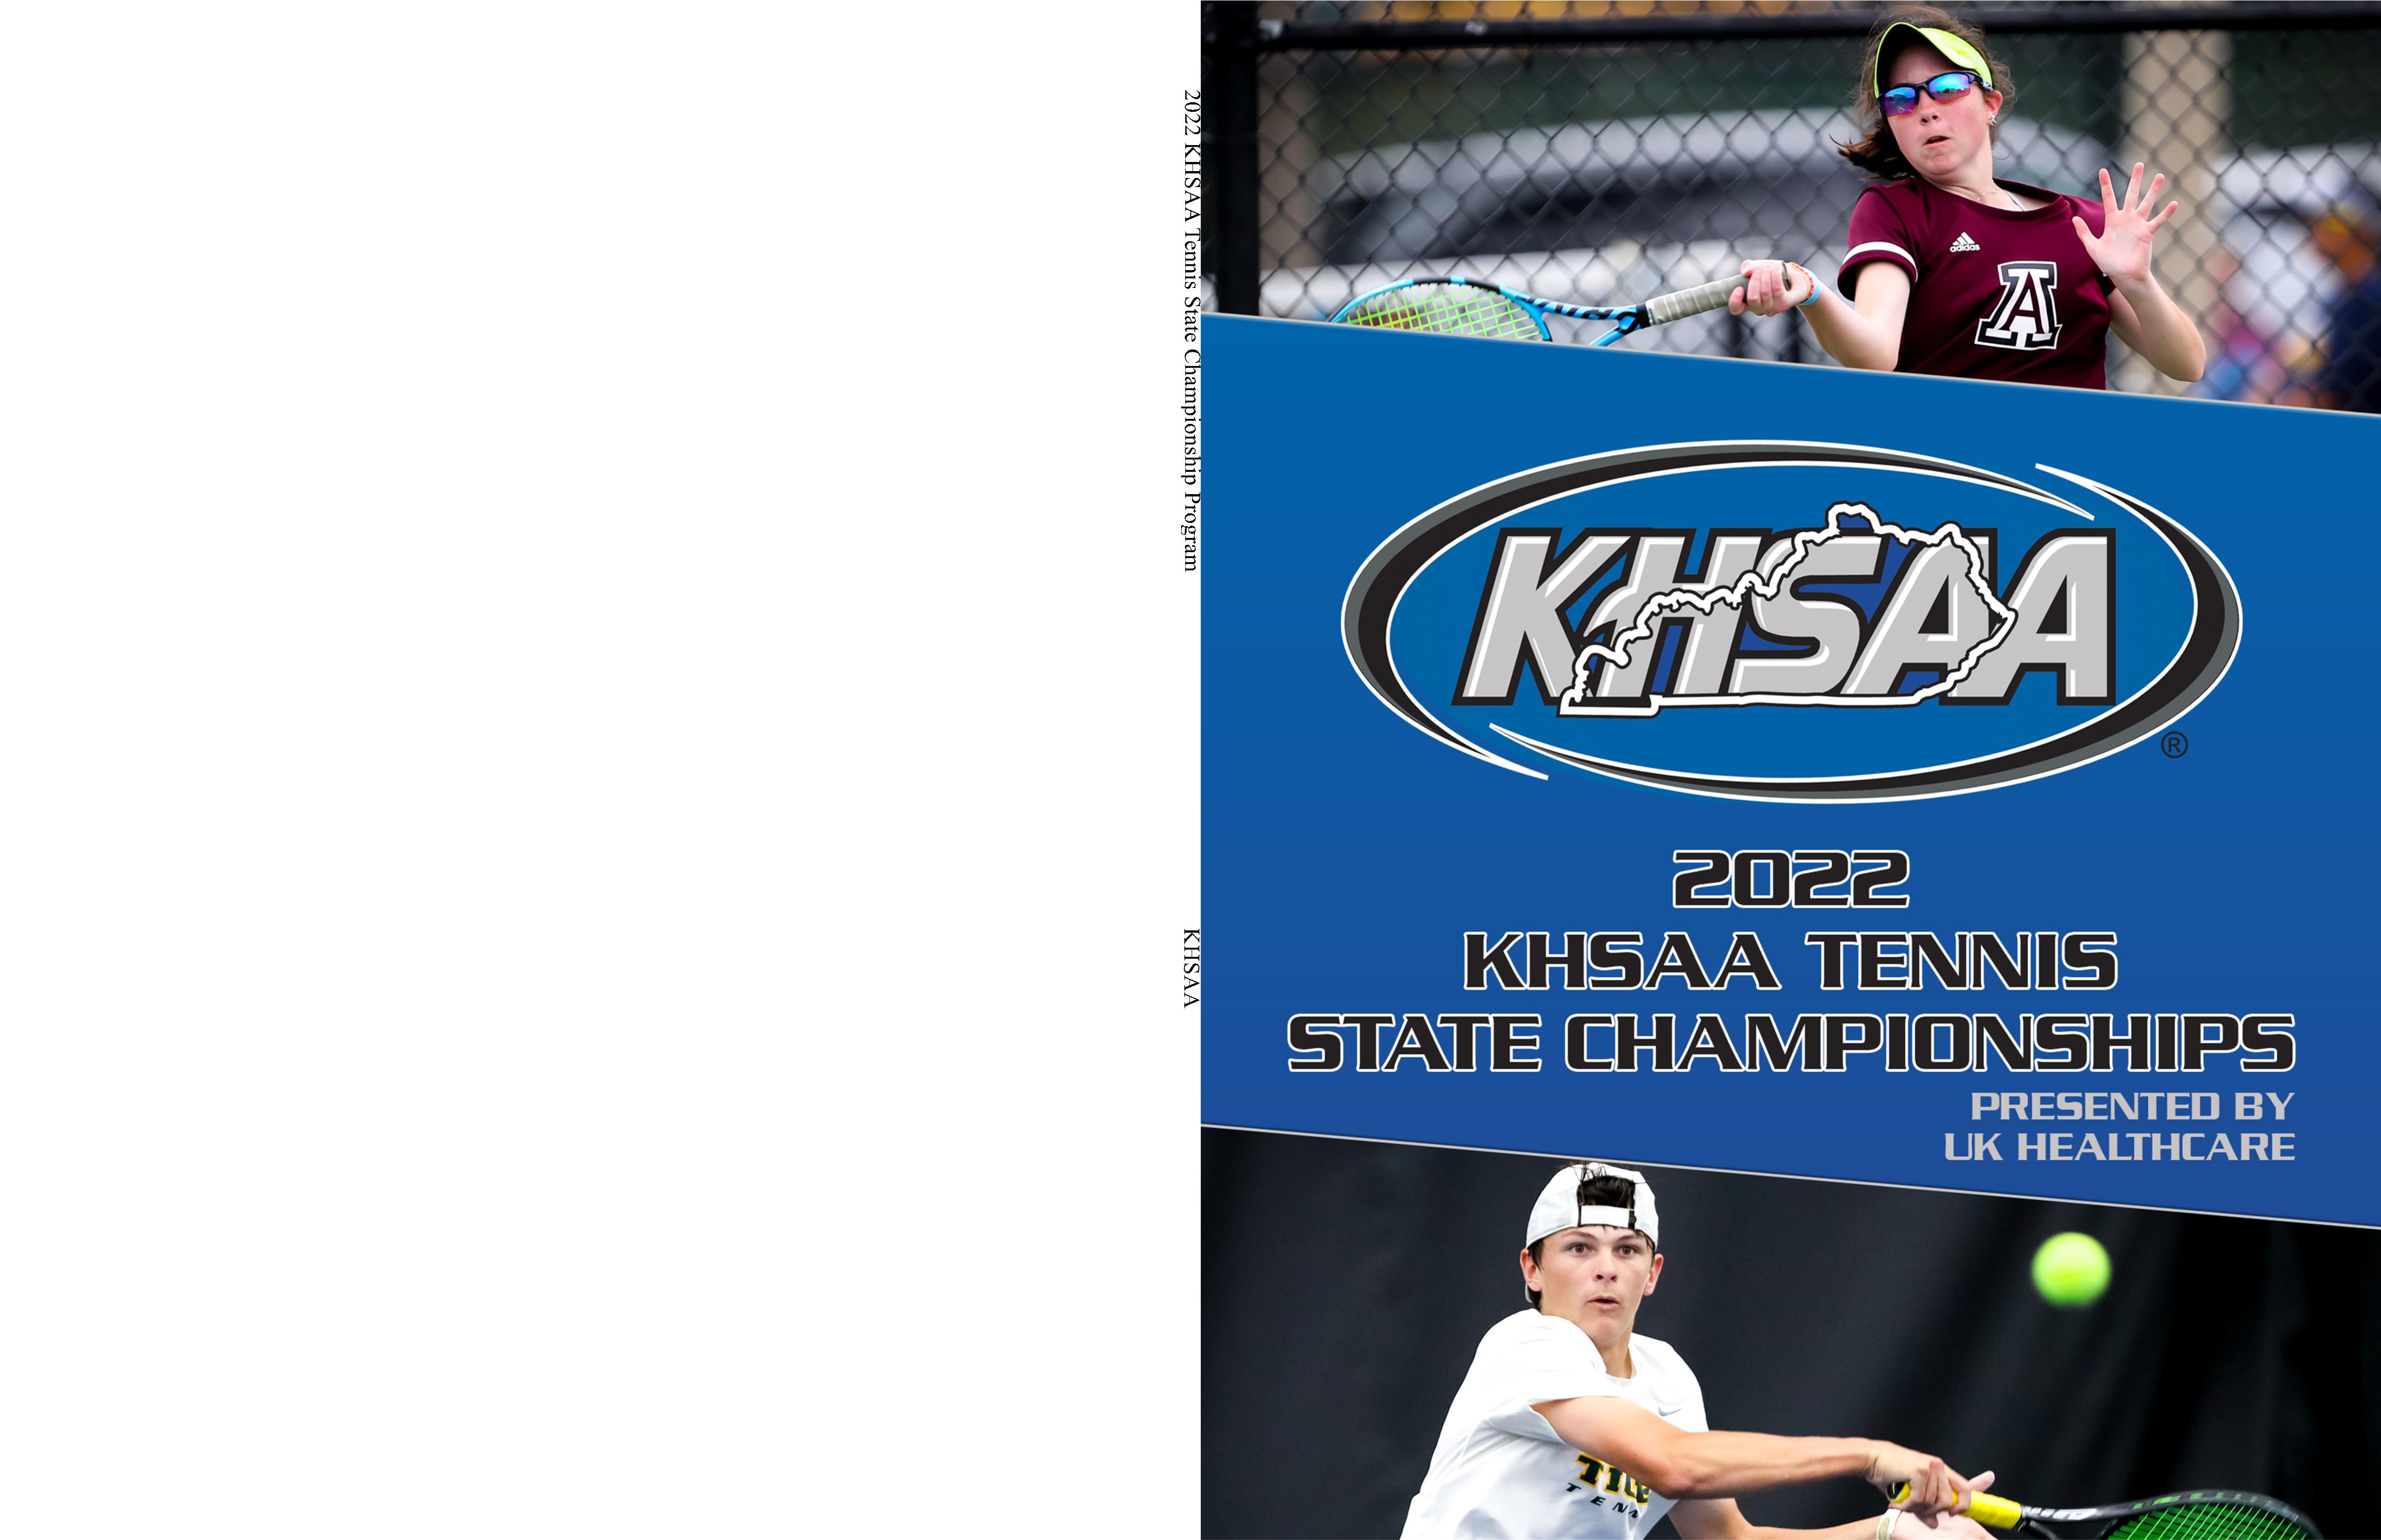 2022 KHSAA Tennis State Championship Program cover image